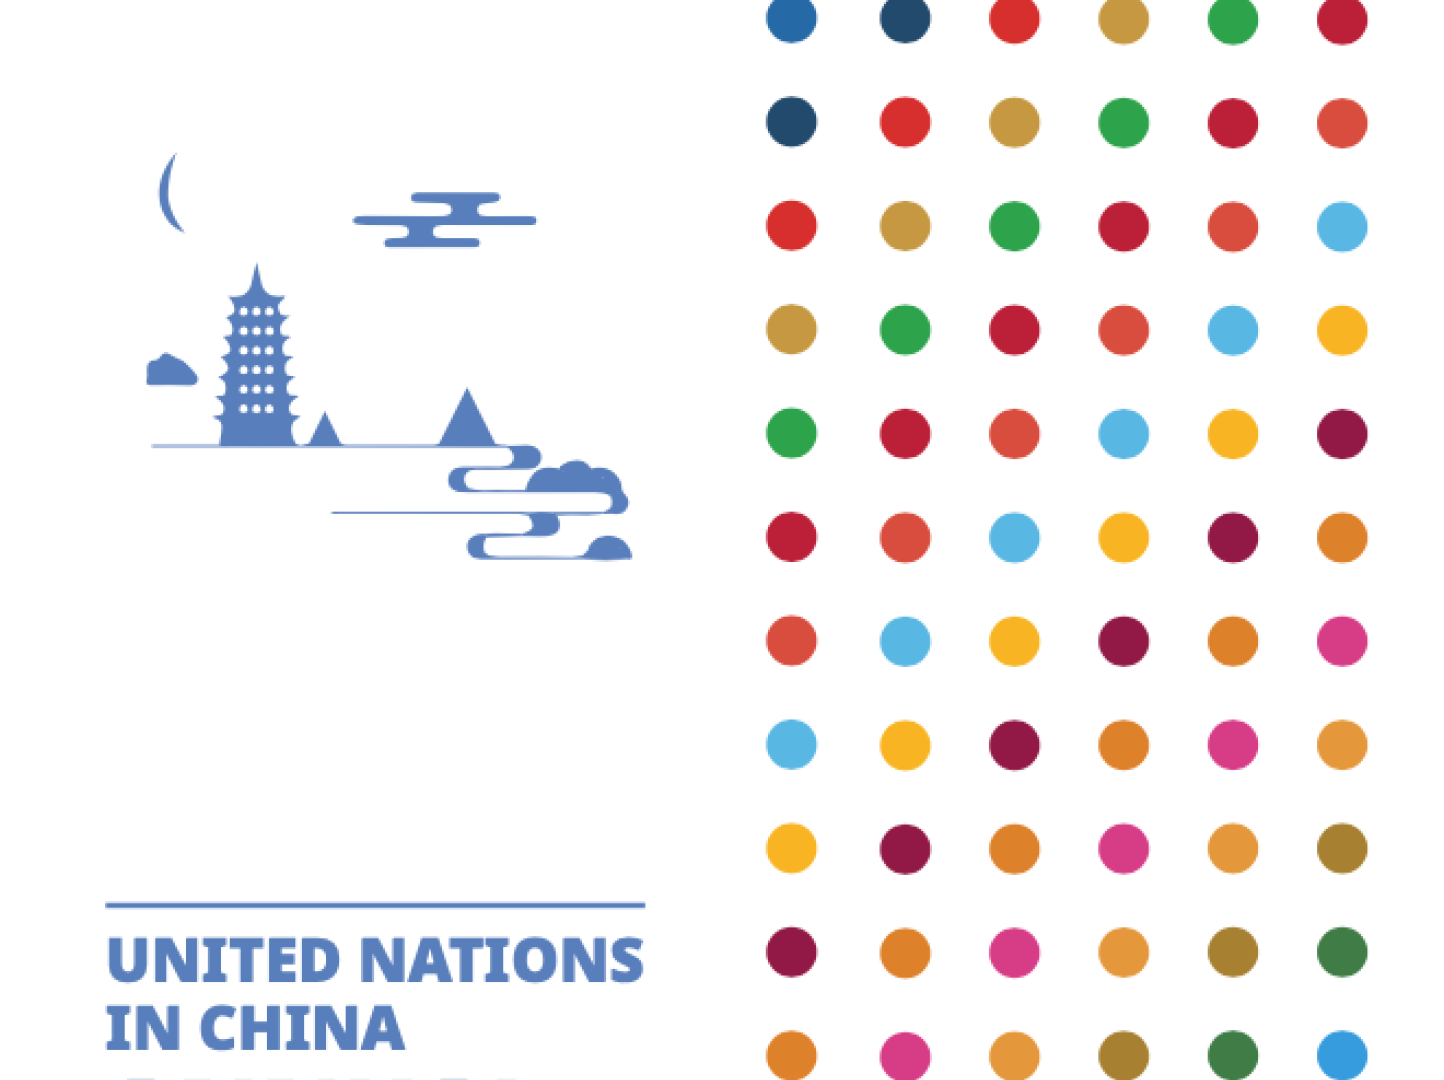 UN China Annual Report 2020 Front Cover